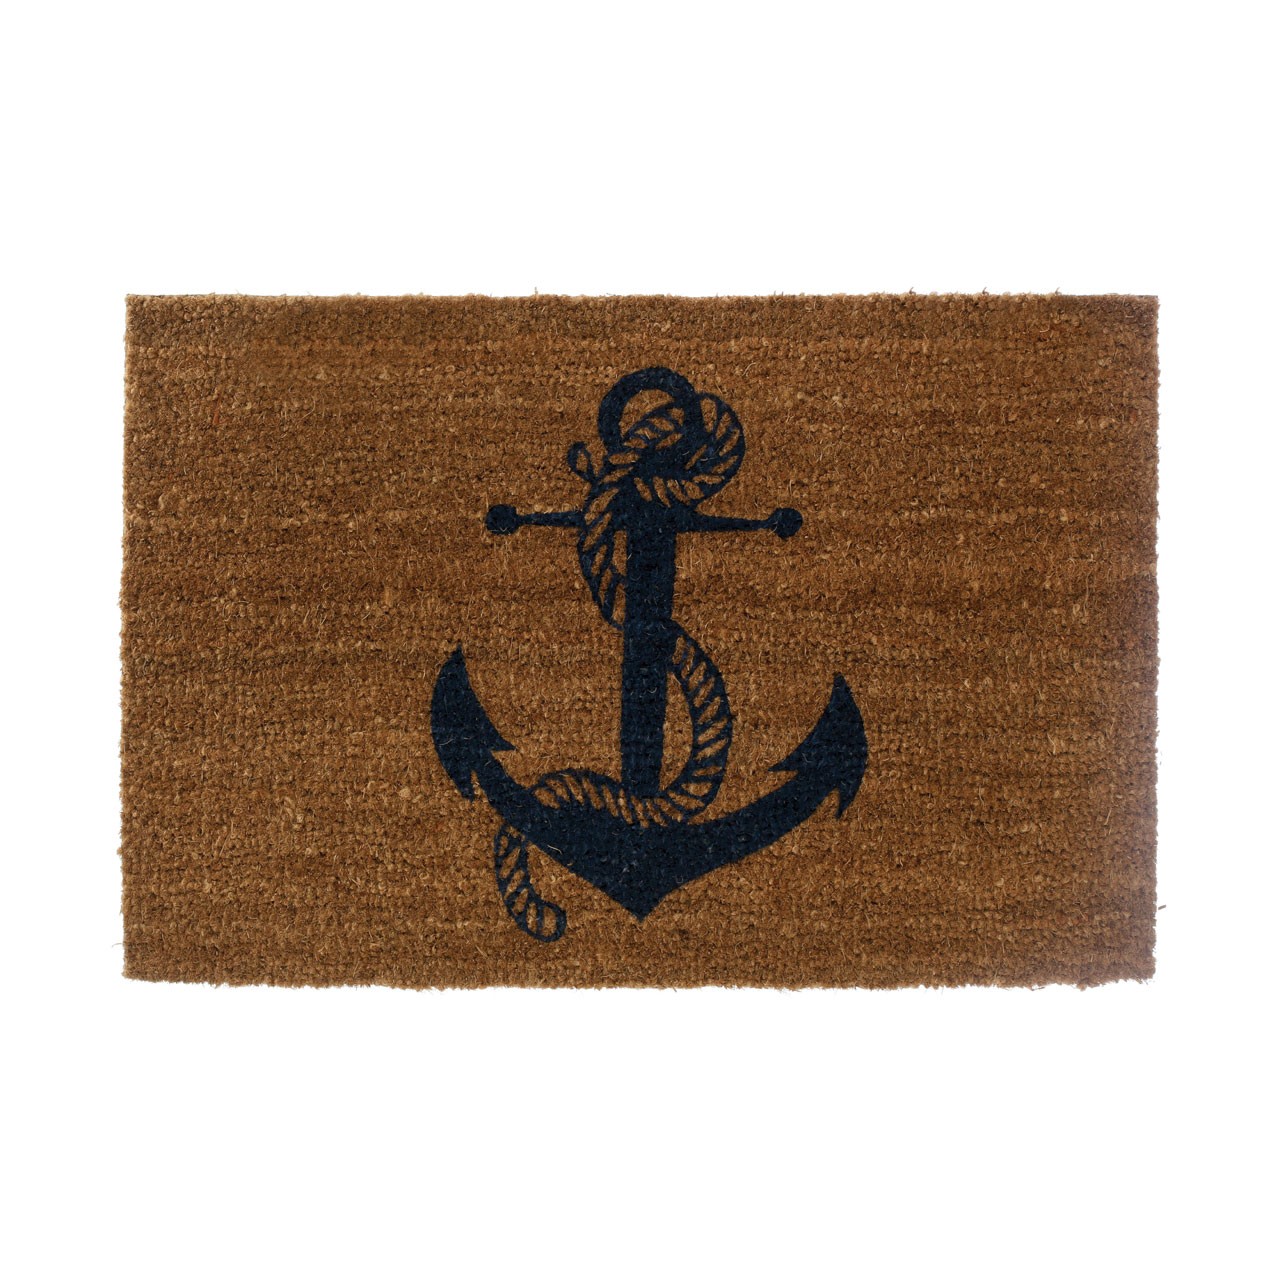 Prime Furnishing Sailor Doormat, PVC Backed Coir